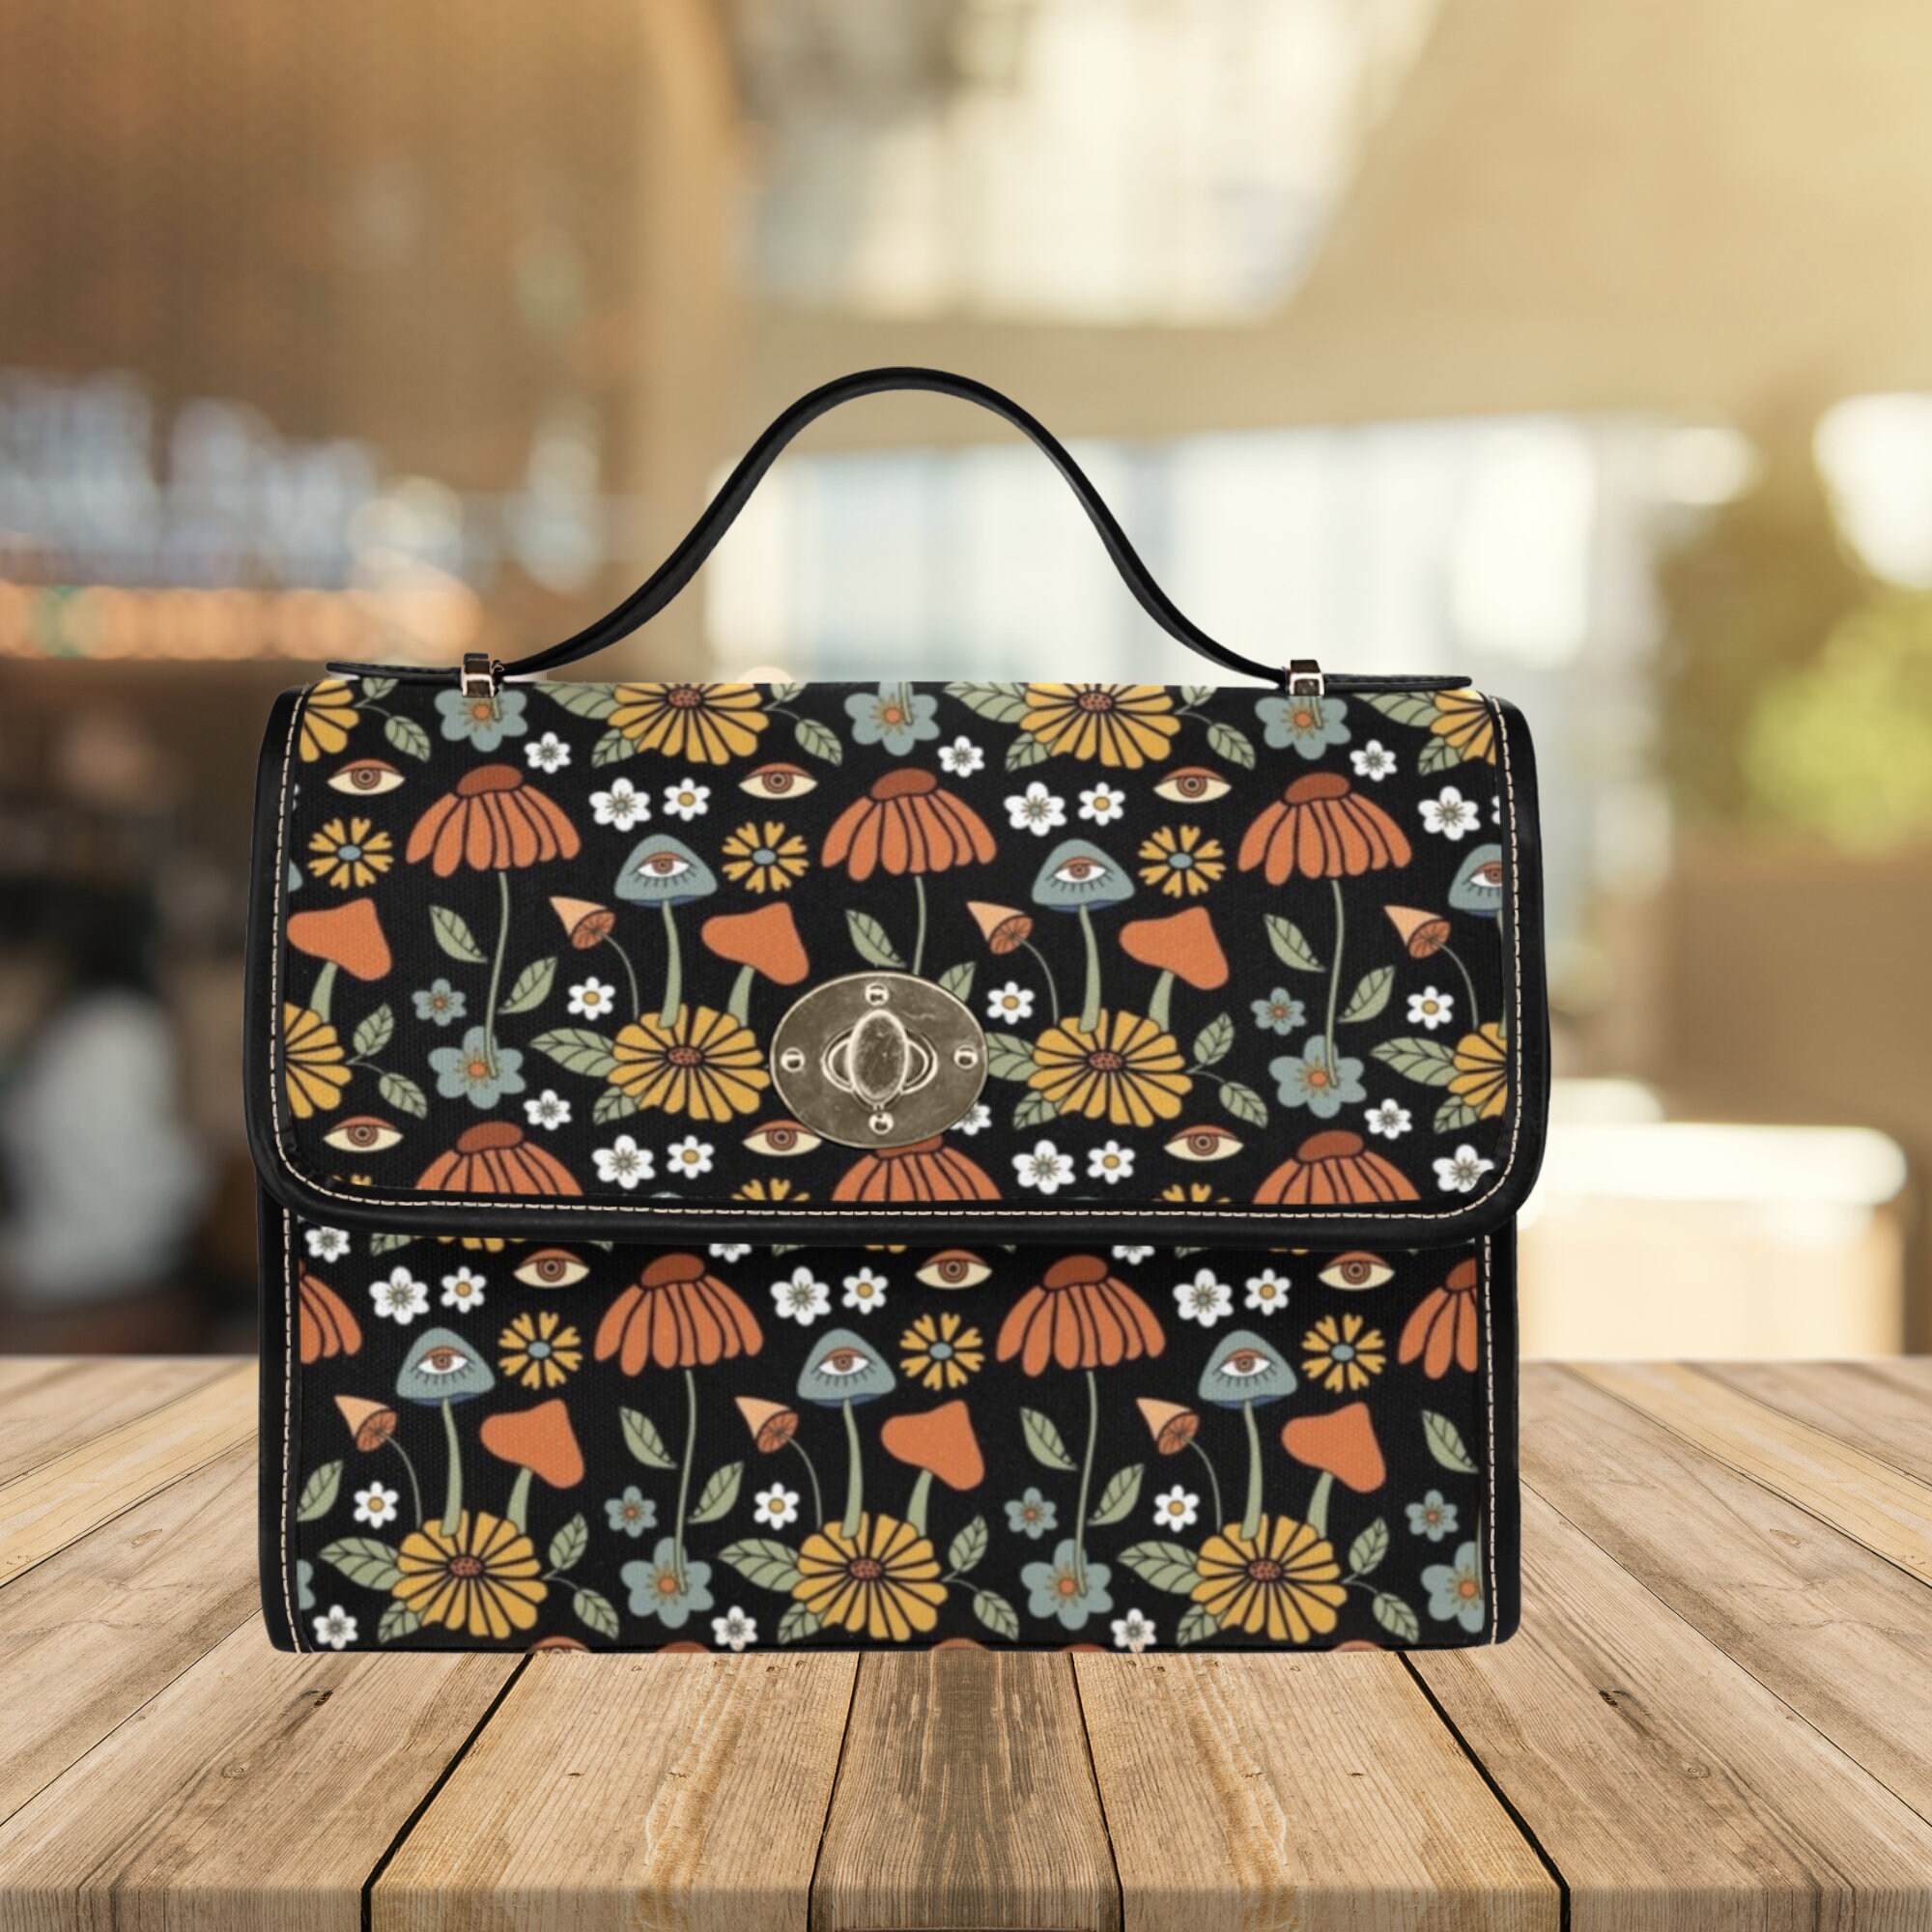 Foiosoh Shoulder Bag Mushroom Flower Patterns Tote Bag Chain Bag Crossbody  Bag Handbag Purse for Women